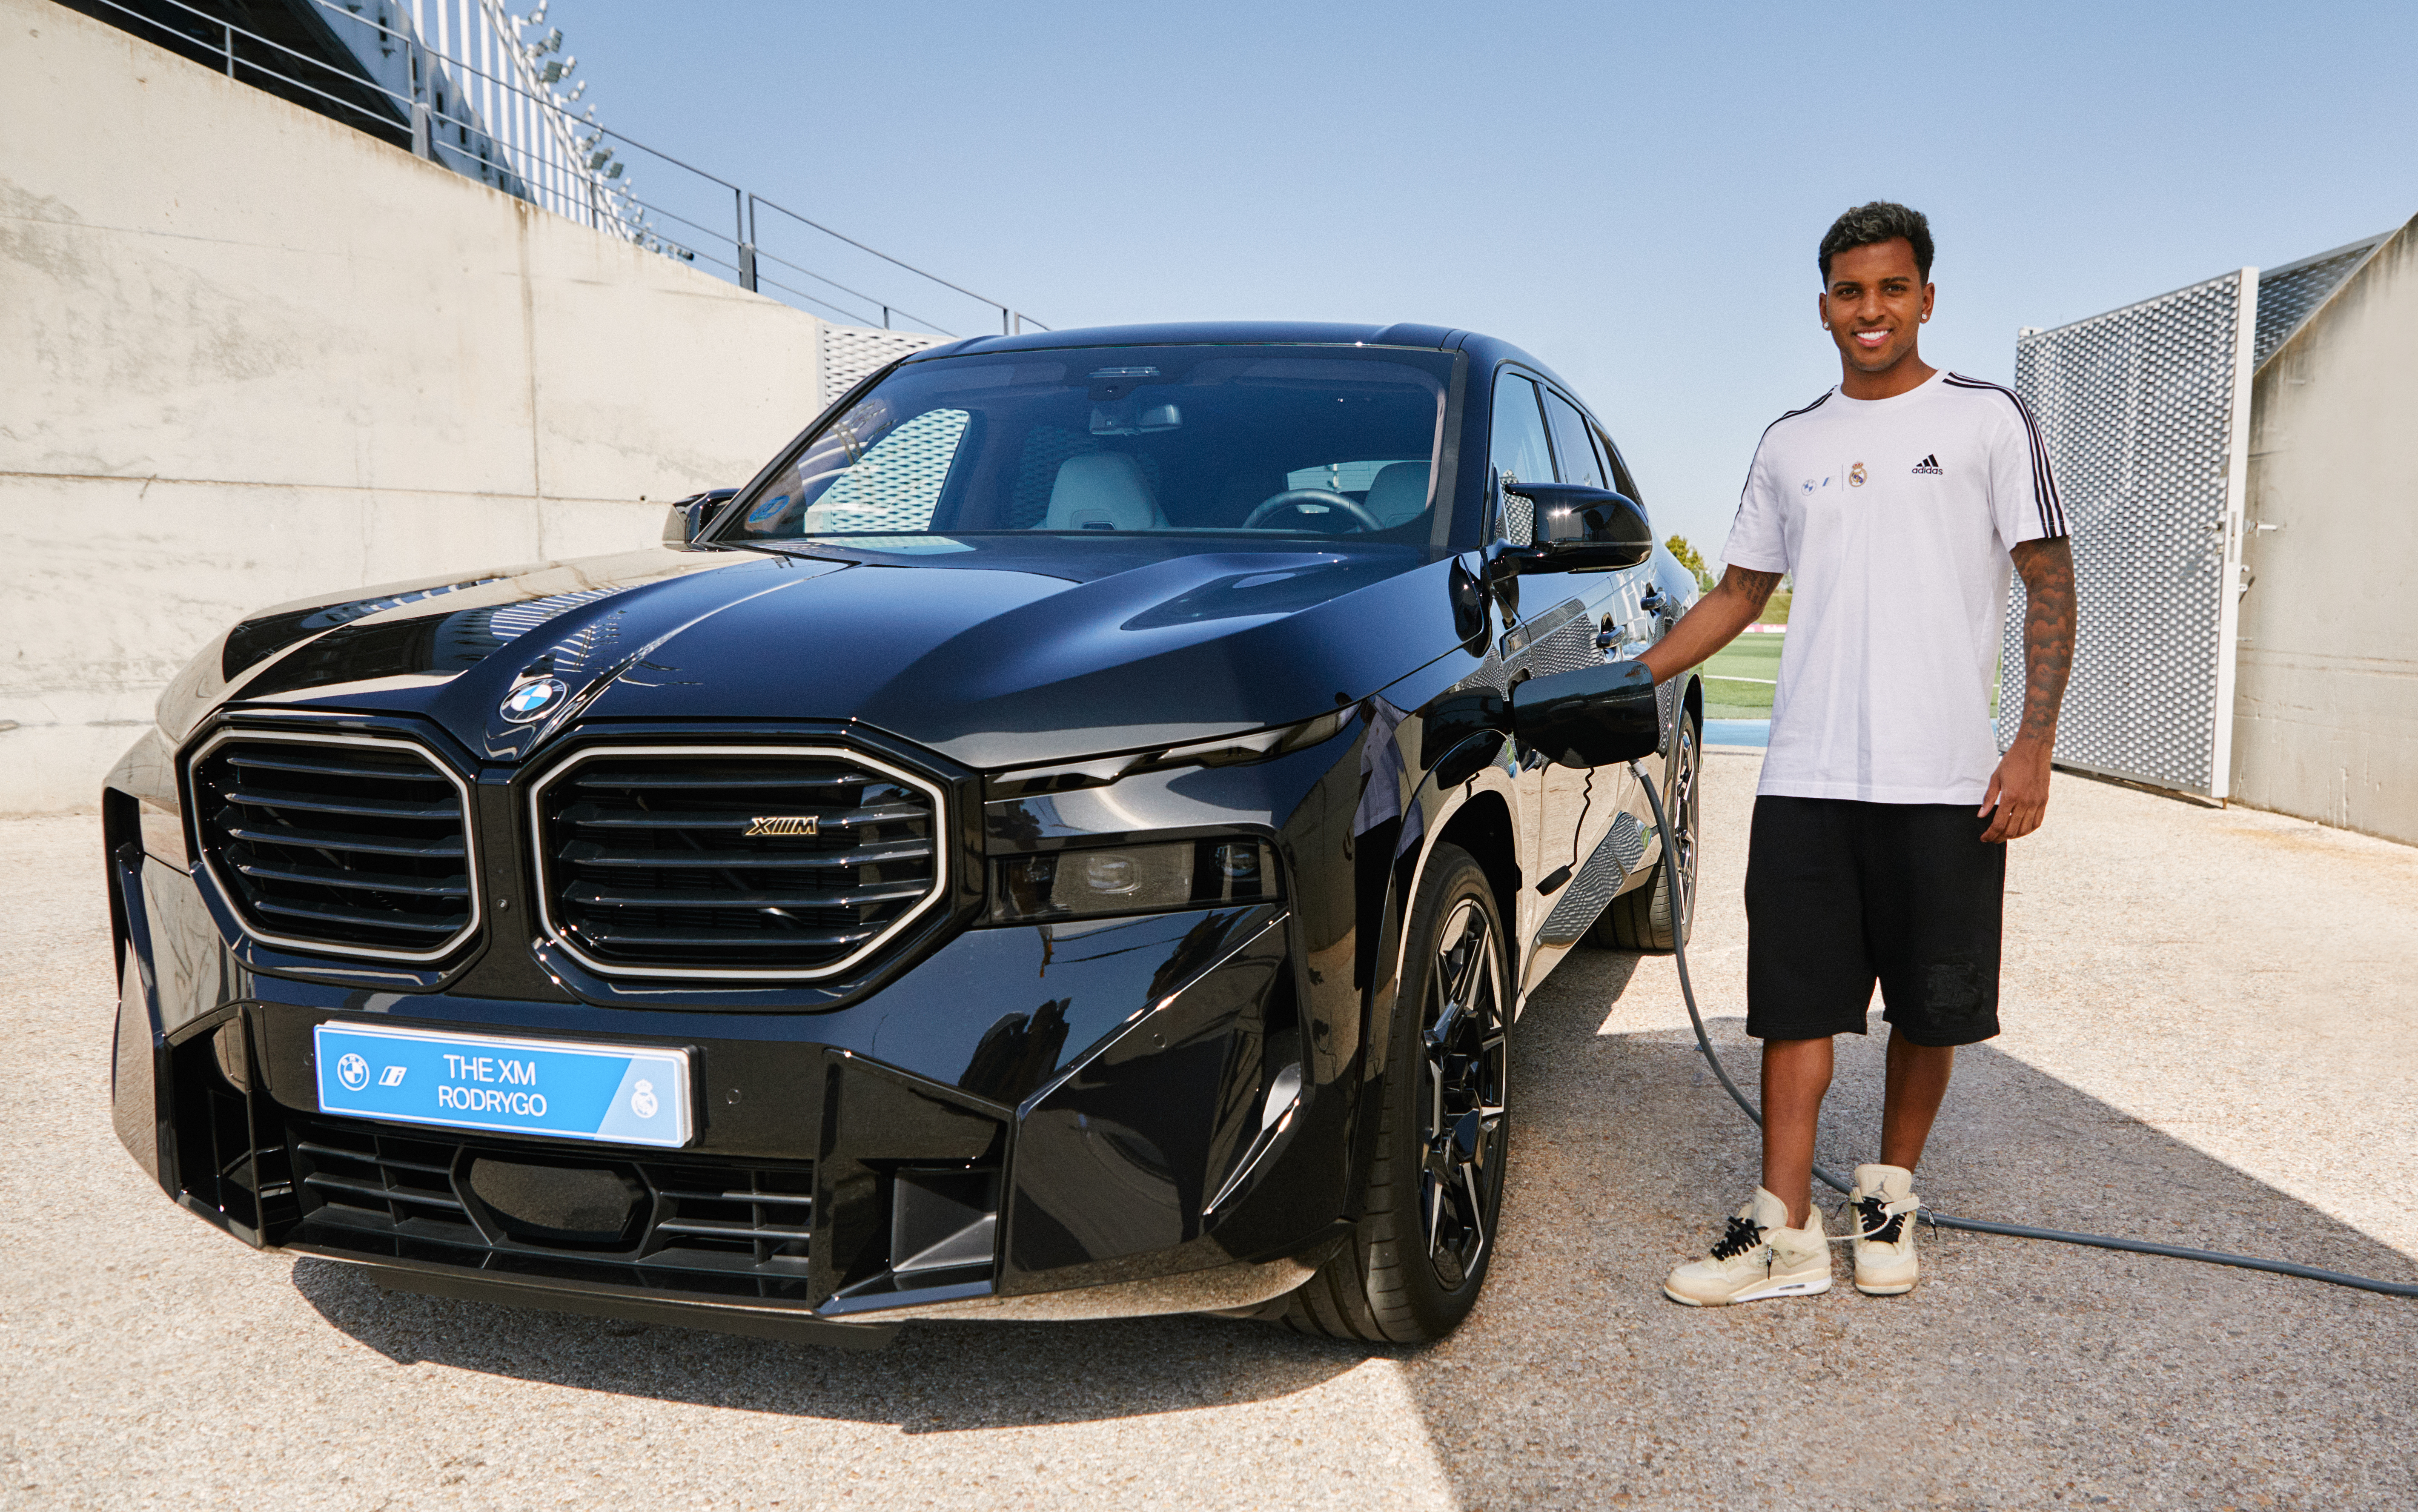 Real Madrid Football players BMW EV 18 - Paul Tan's Automotive News